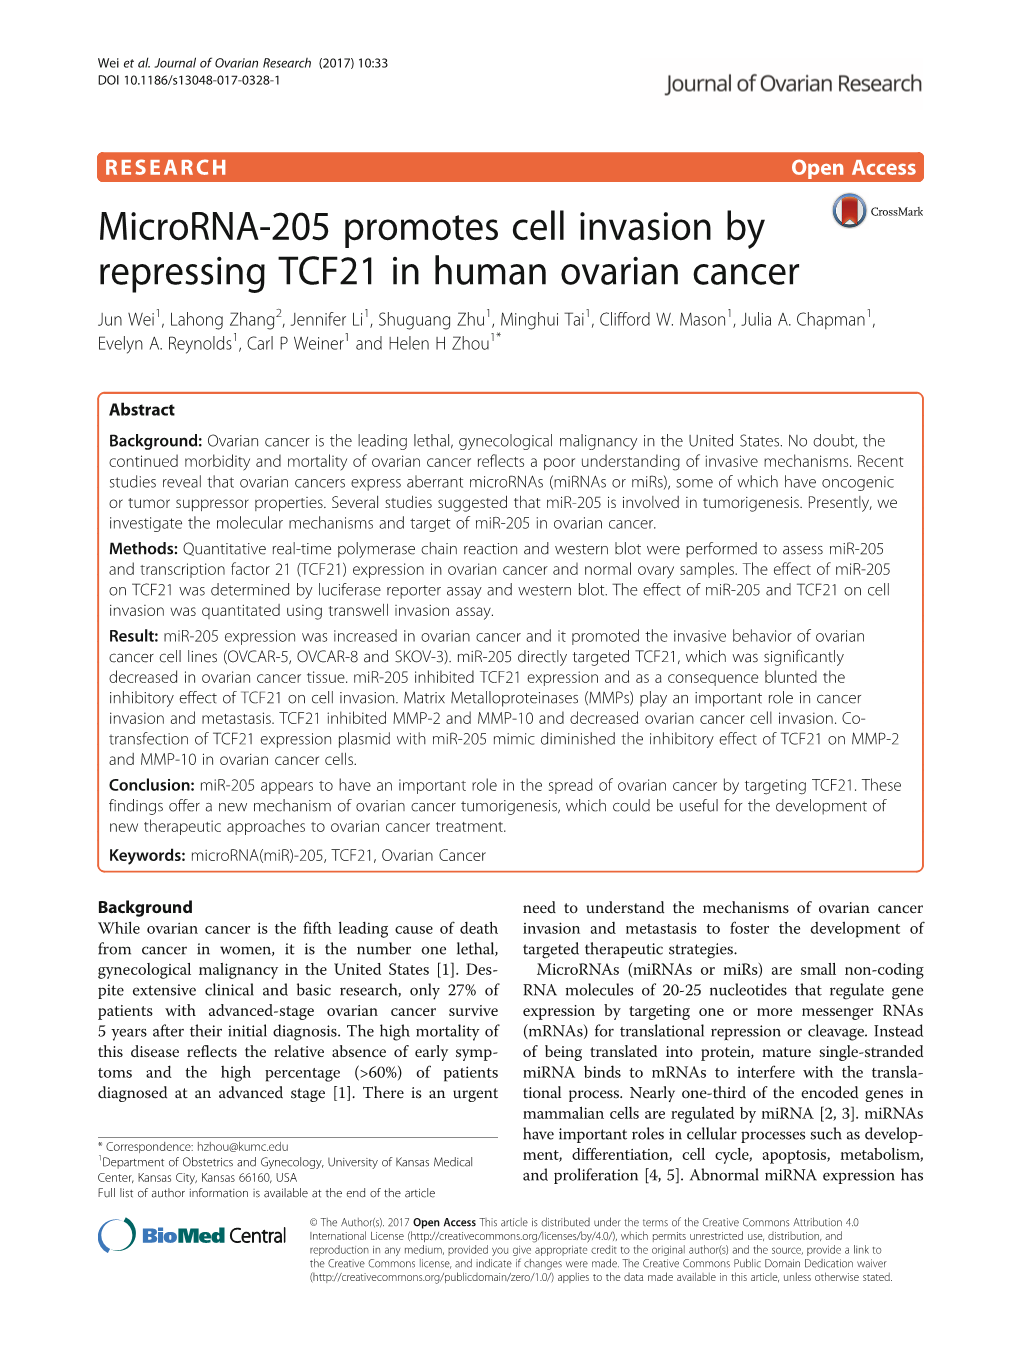 Microrna-205 Promotes Cell Invasion by Repressing TCF21 in Human Ovarian Cancer Jun Wei1, Lahong Zhang2, Jennifer Li1, Shuguang Zhu1, Minghui Tai1, Clifford W